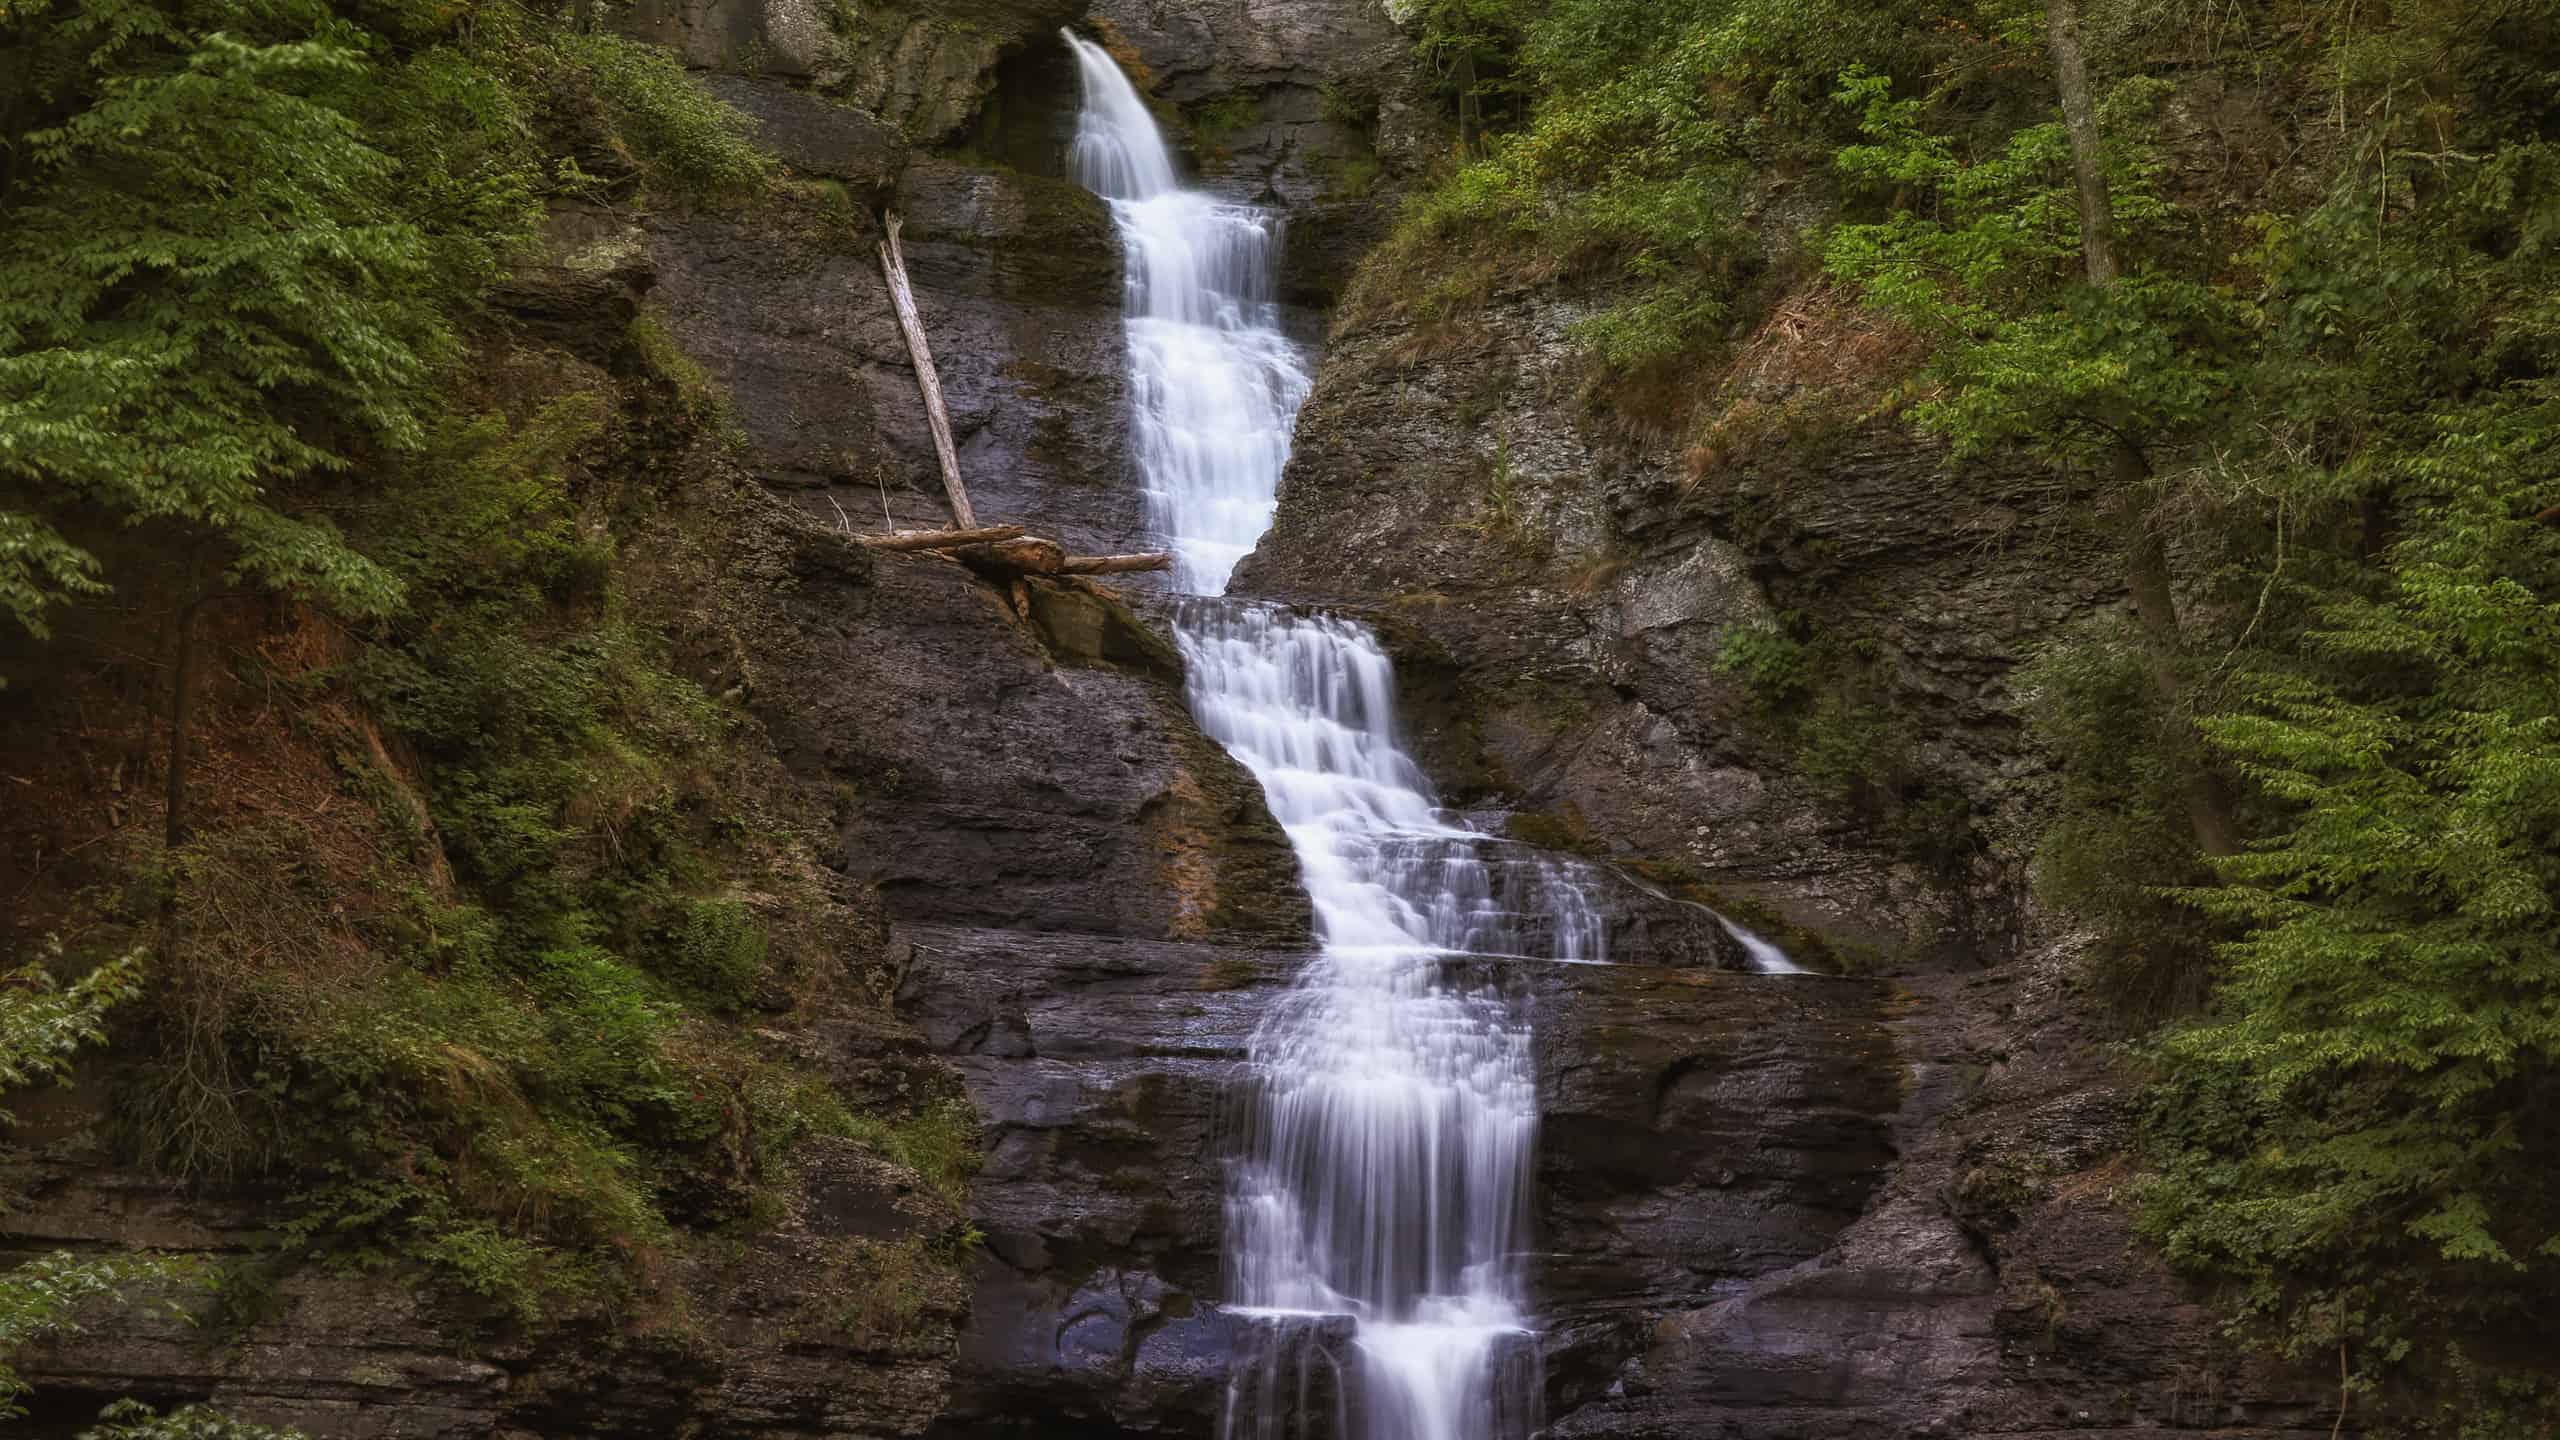 Raymondskill Falls is the tallest waterfall in Pennsylvania.